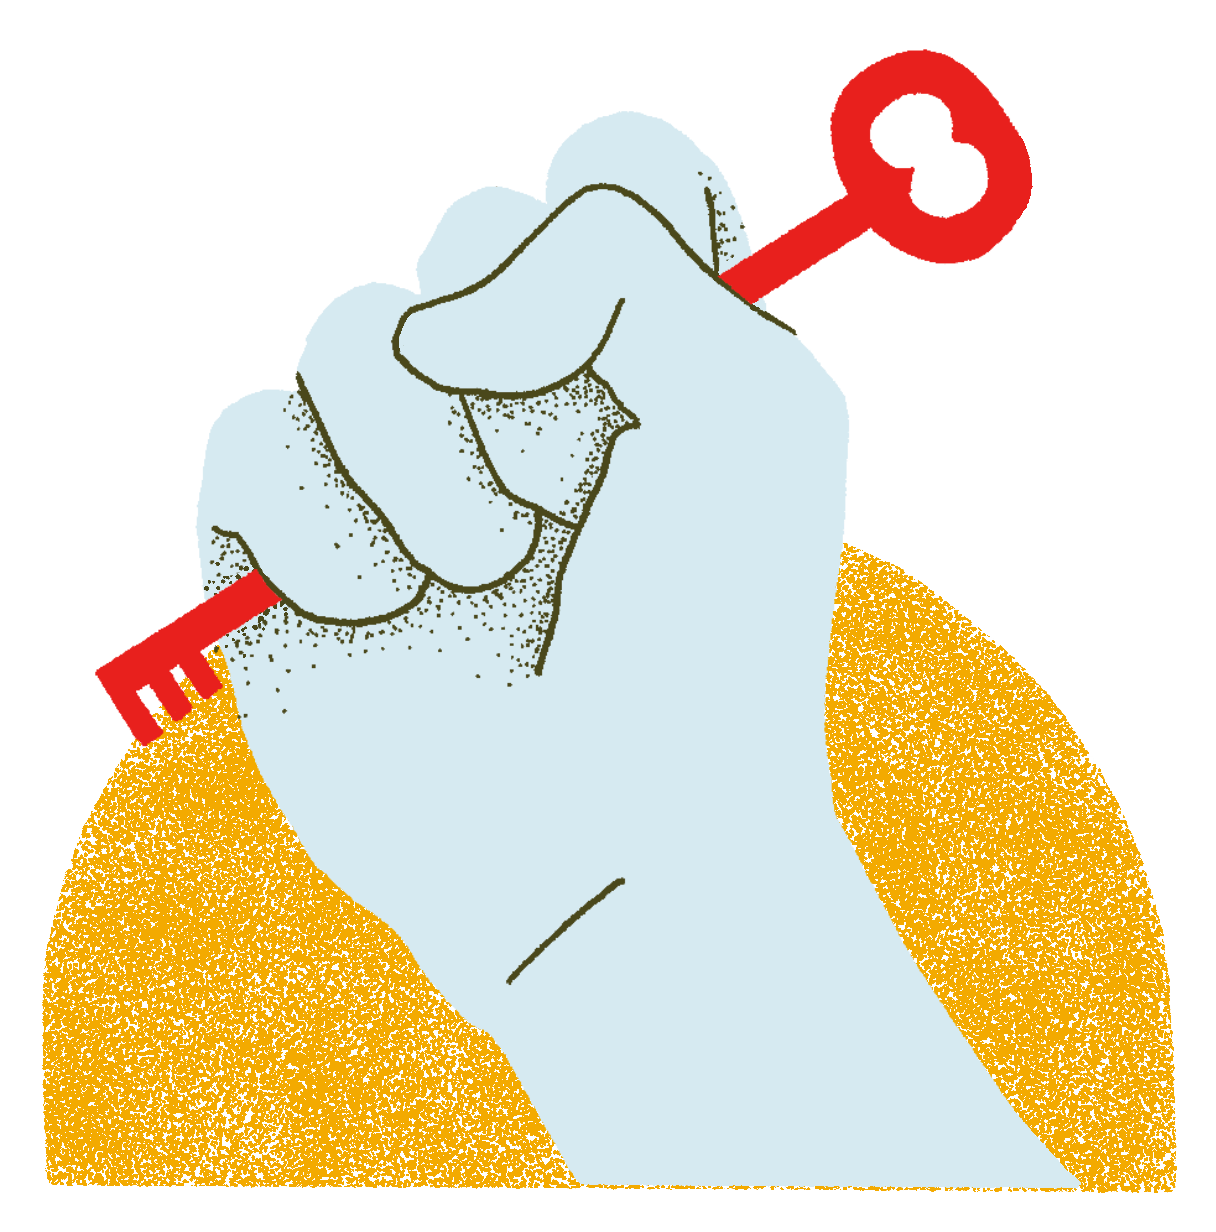 Fist holding key.